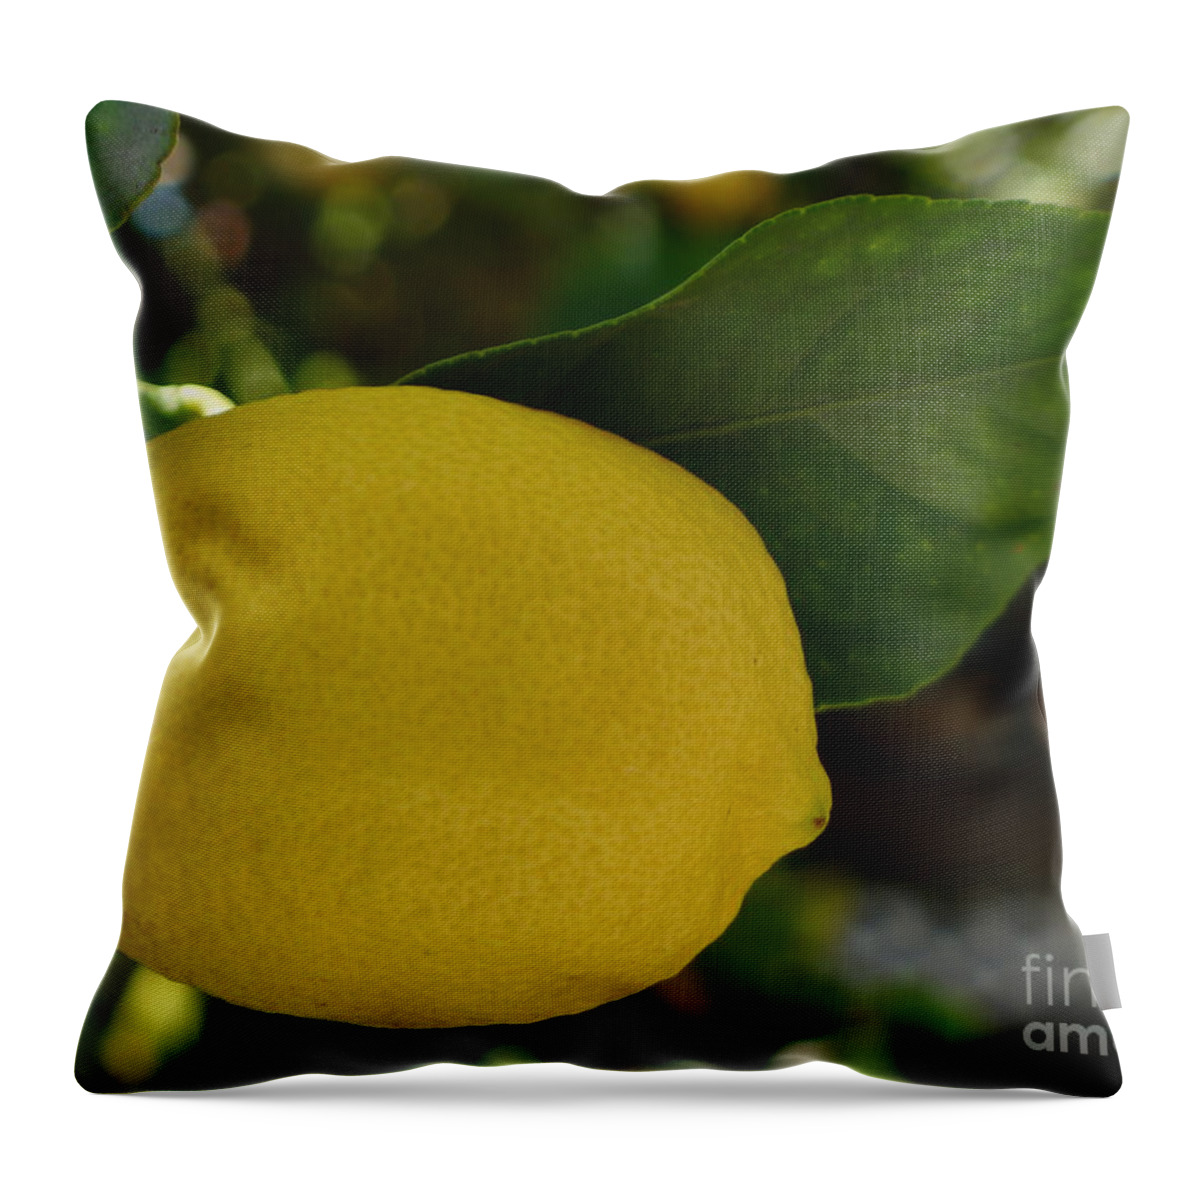 Lemon Throw Pillow featuring the photograph Lemon by Nora Boghossian